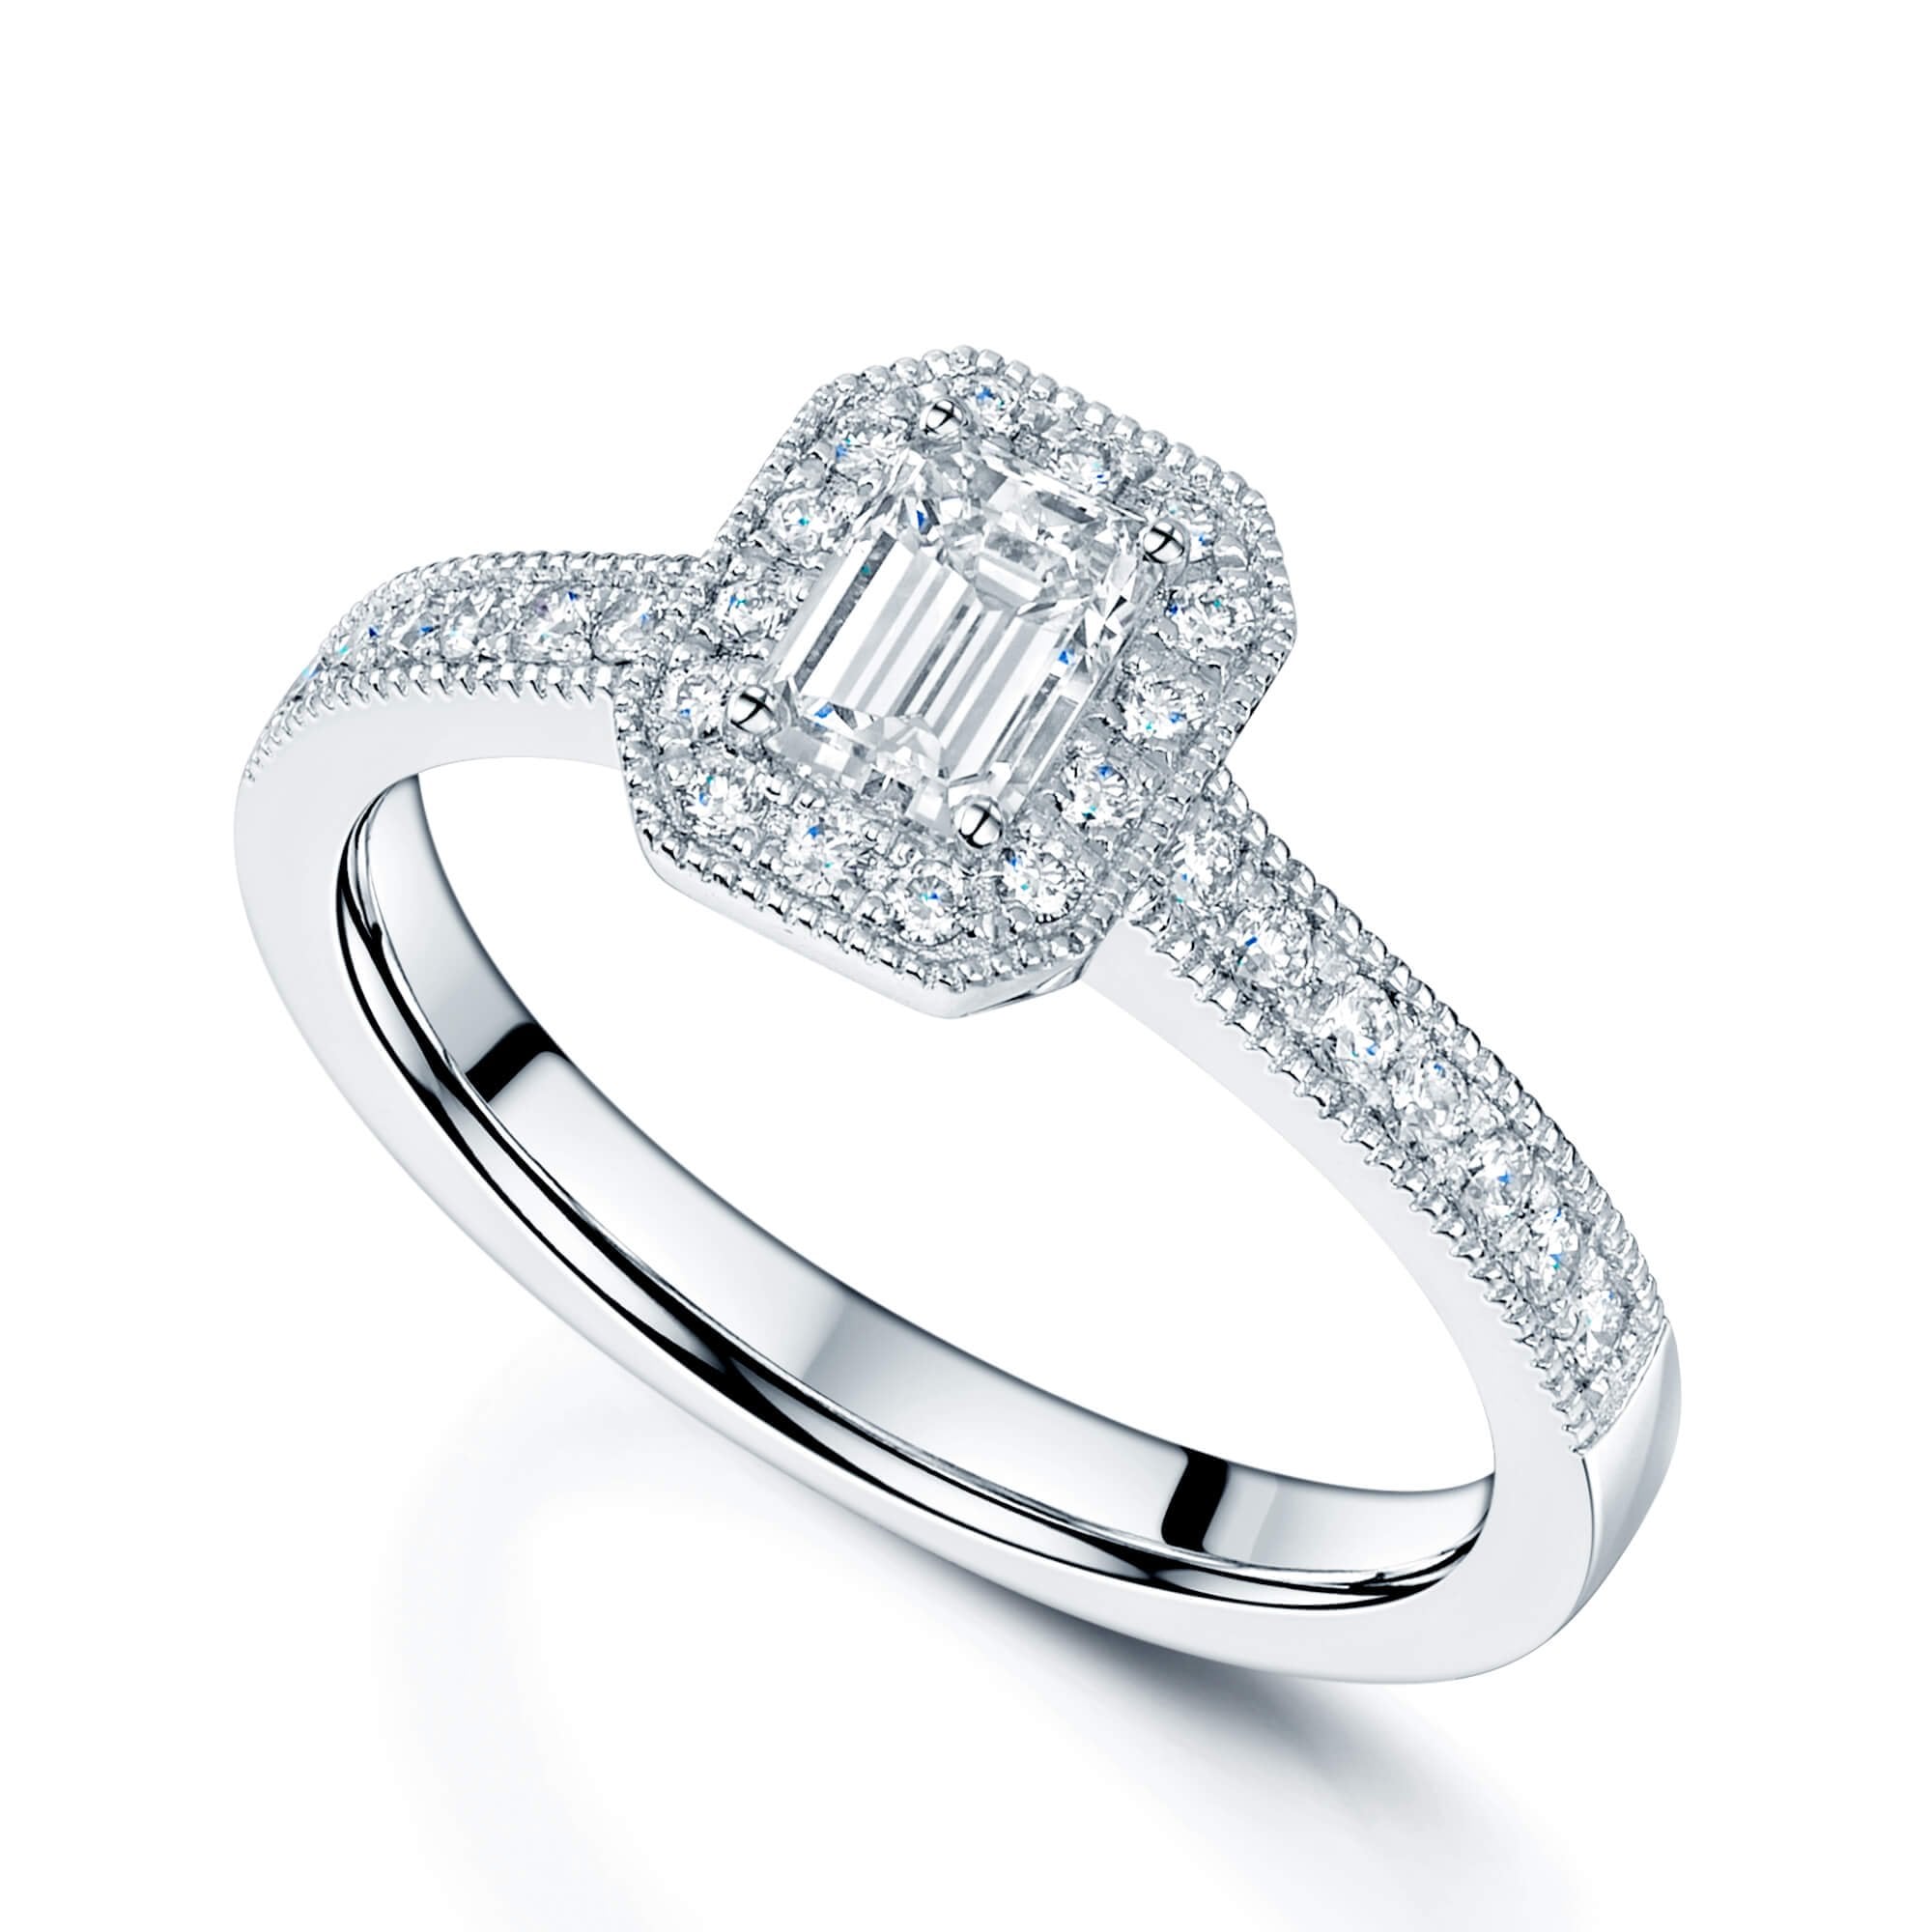 Platinum Emerald Cut Diamond Halo Ring With Millgrain Edge Round Brilliant Cut Diamond Shoulders